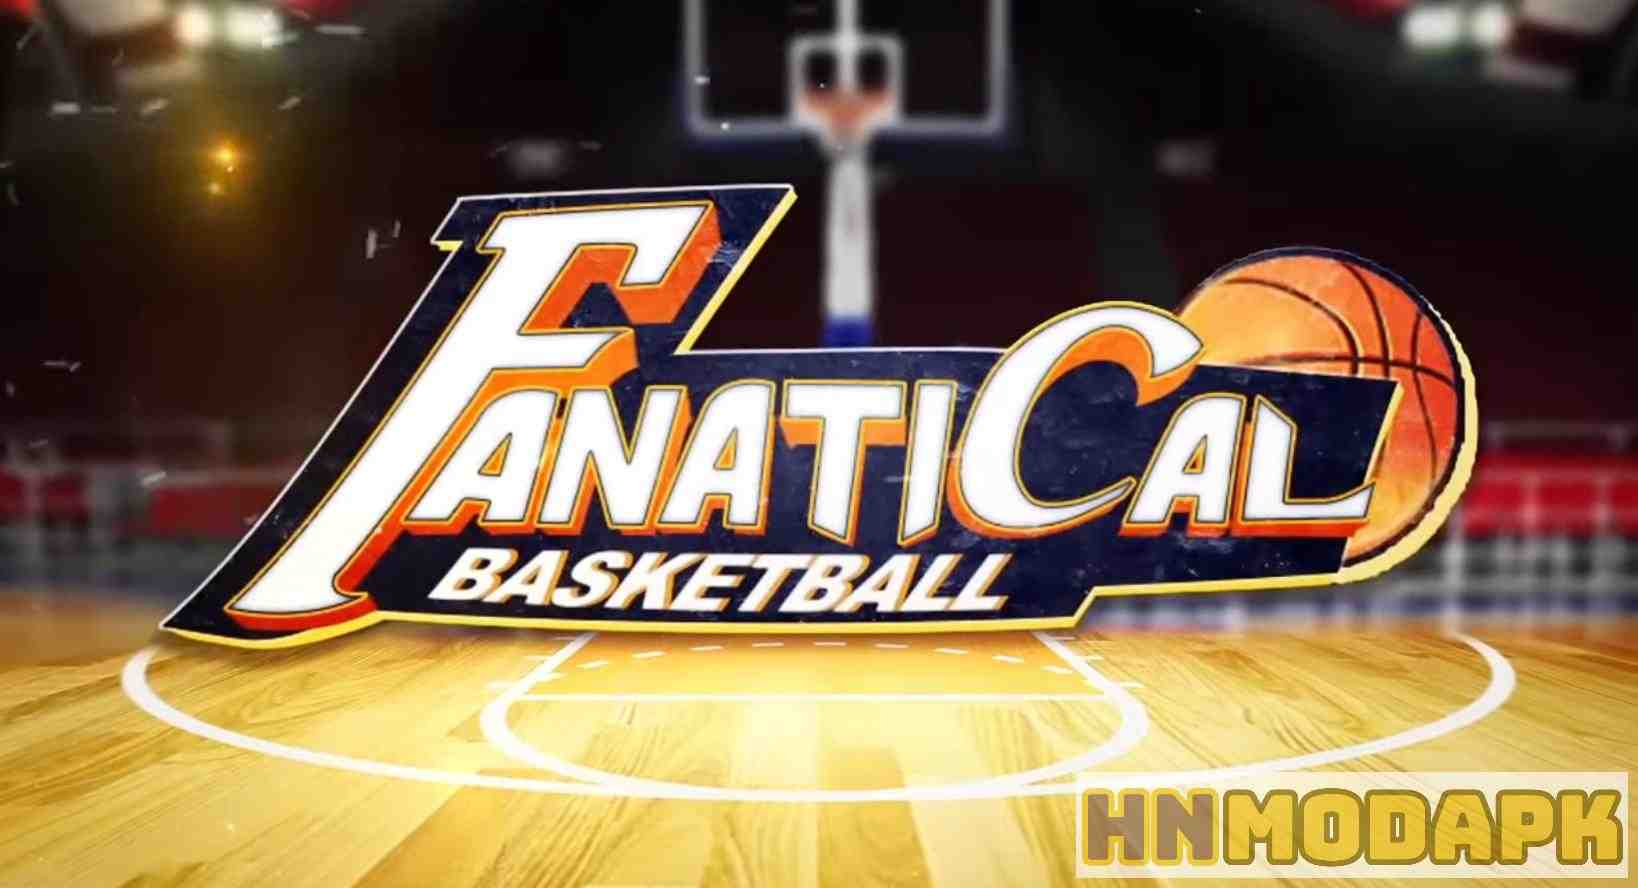 Fanatical Basketball MOD (Full Pro Menu, Infinite Money, Max Levels) APK 1.0.13